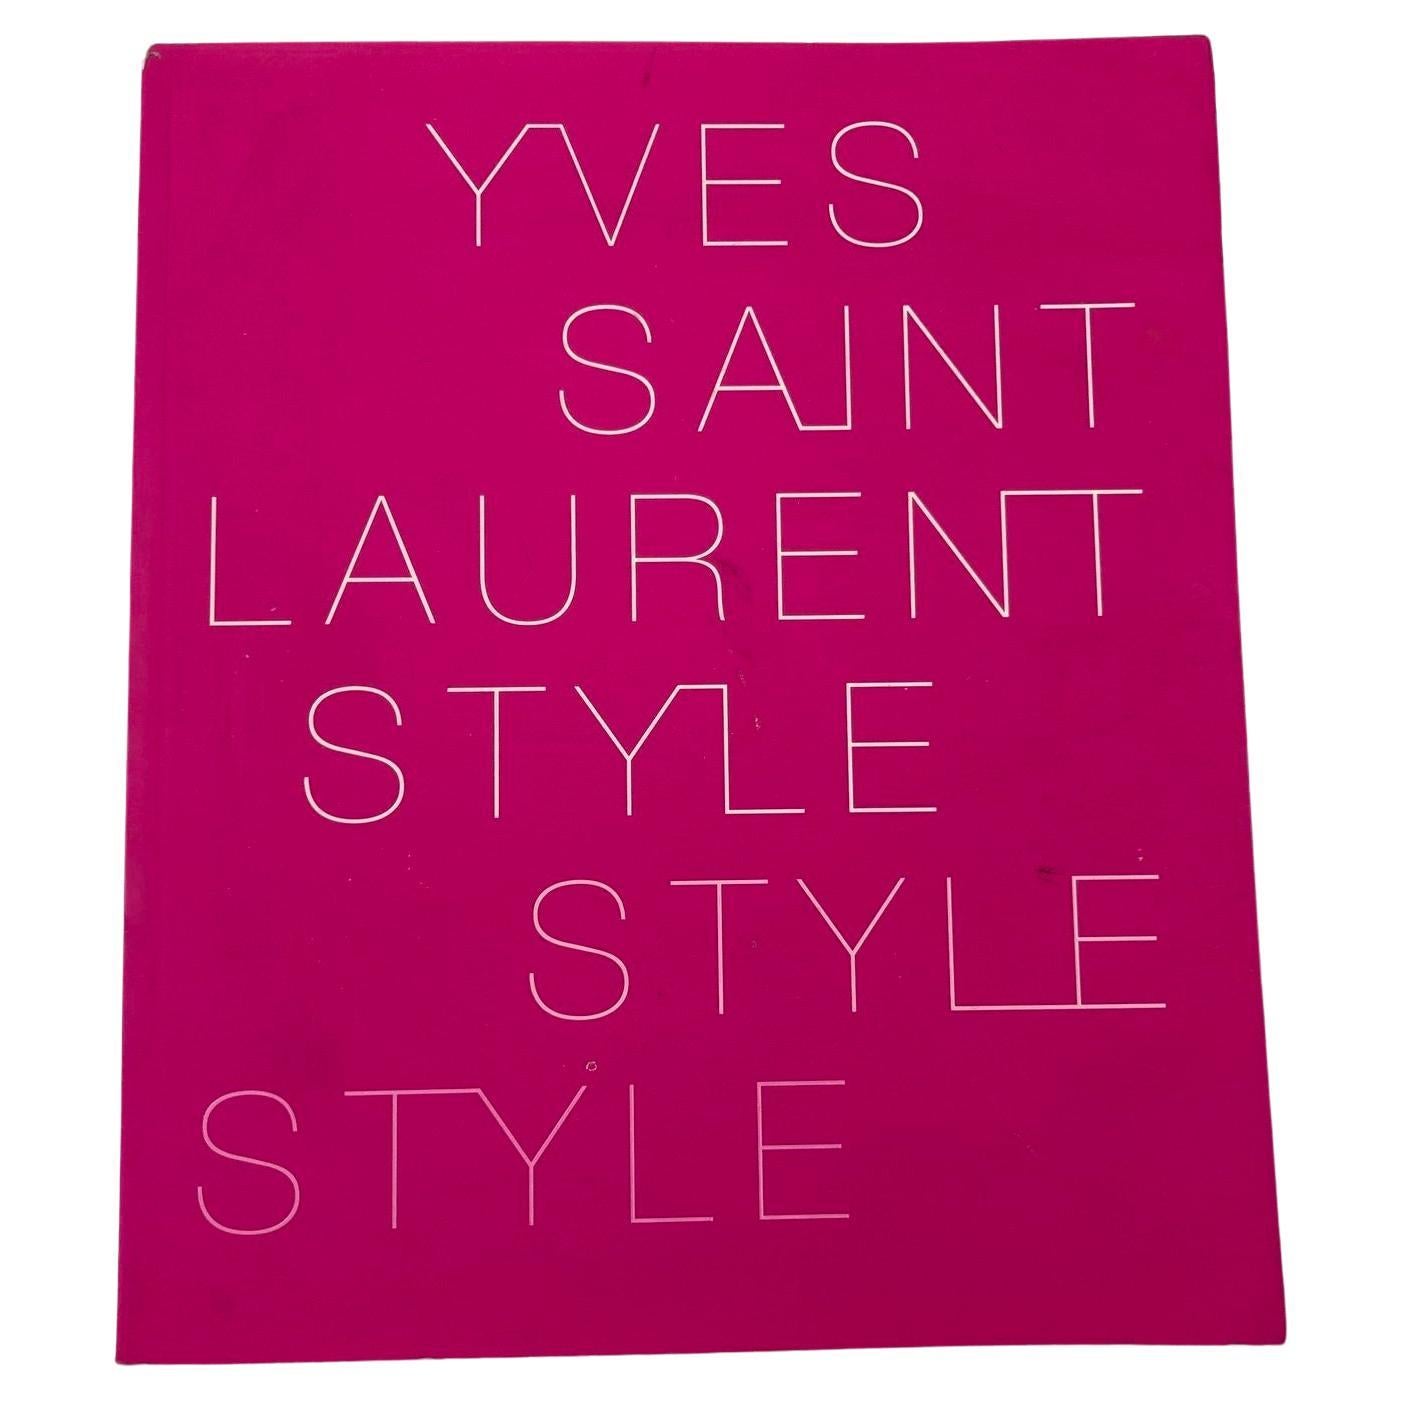 Yves Saint Laurent Style Paperback 2008 Rosa Buch von Foundation Pierre Berge